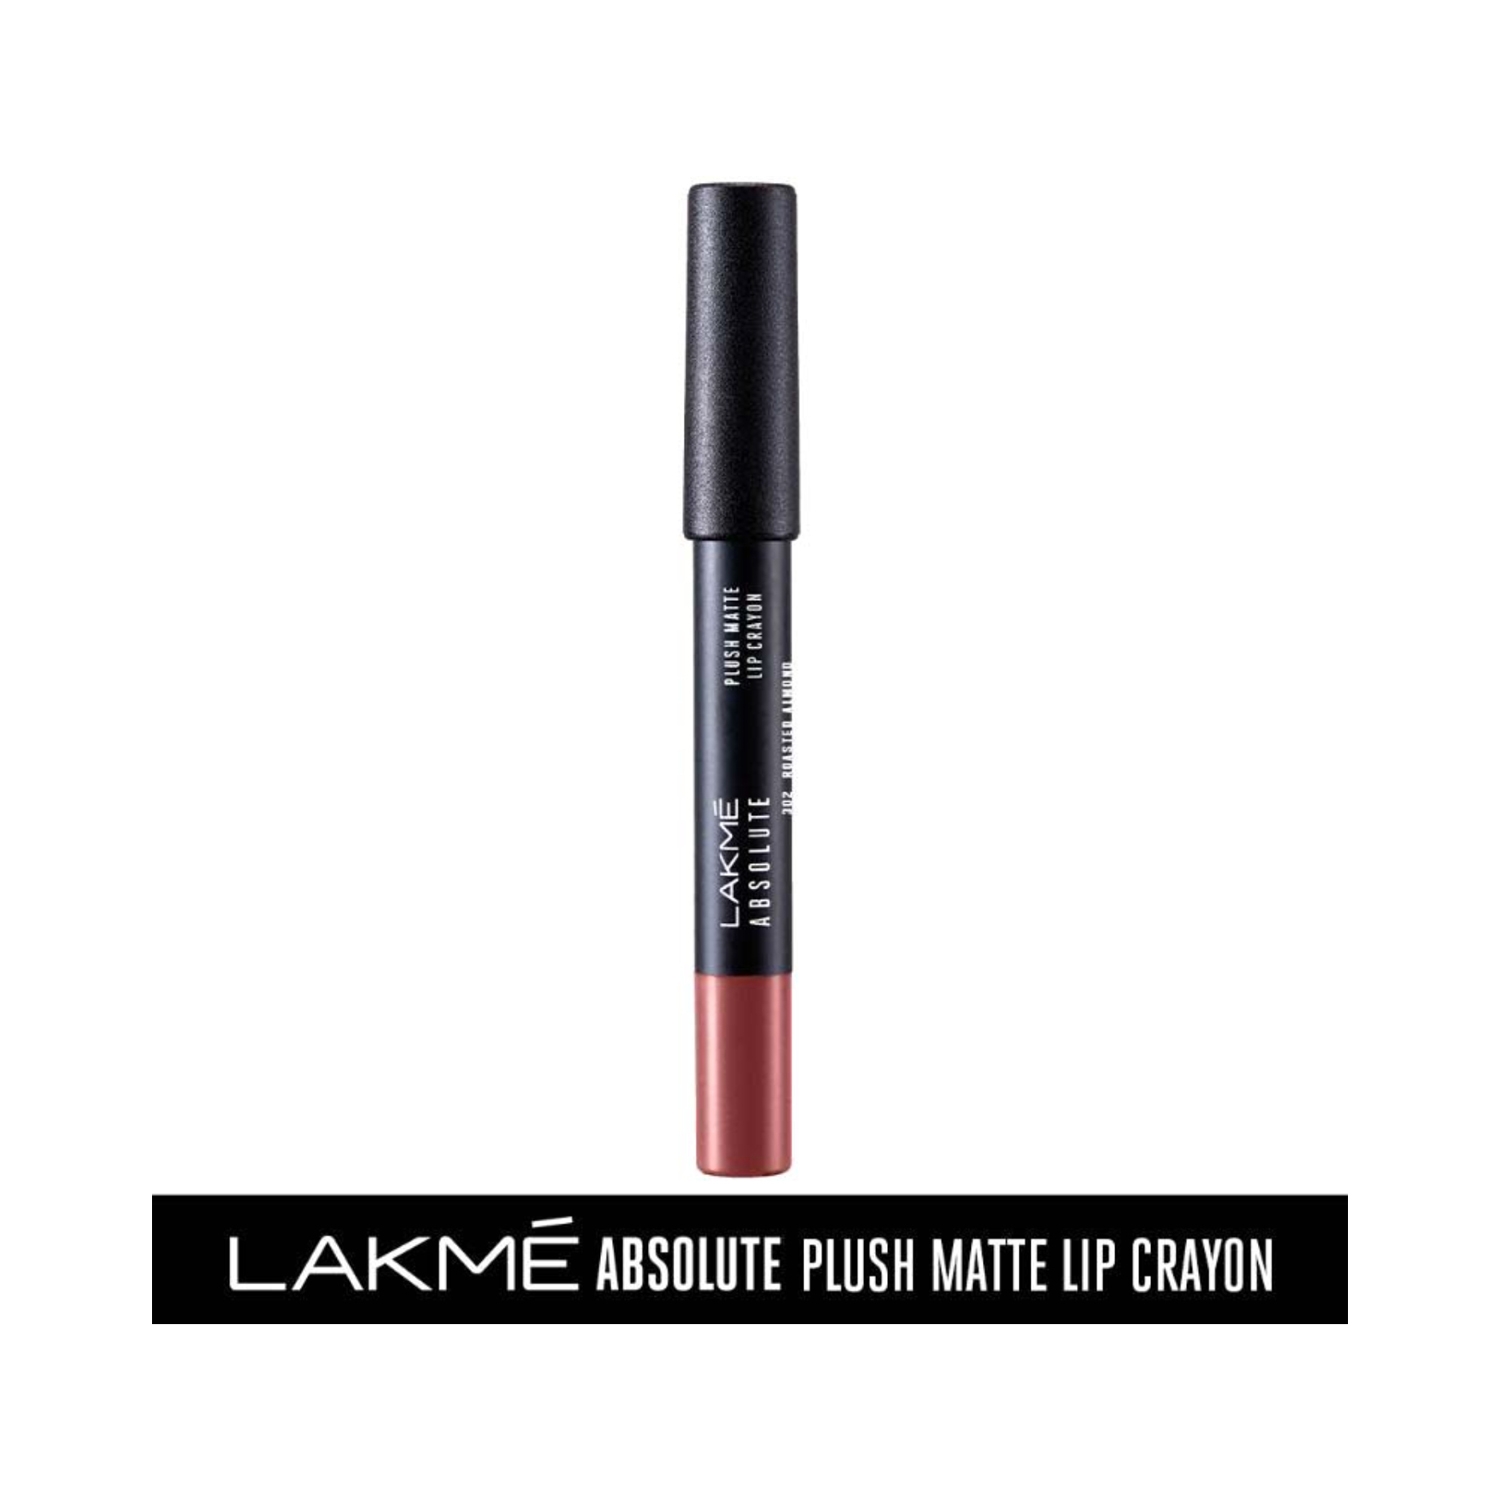 Lakme | Lakme Absolute Plush Matte Lip Crayon - 302 Roasted Almond (2.8g)